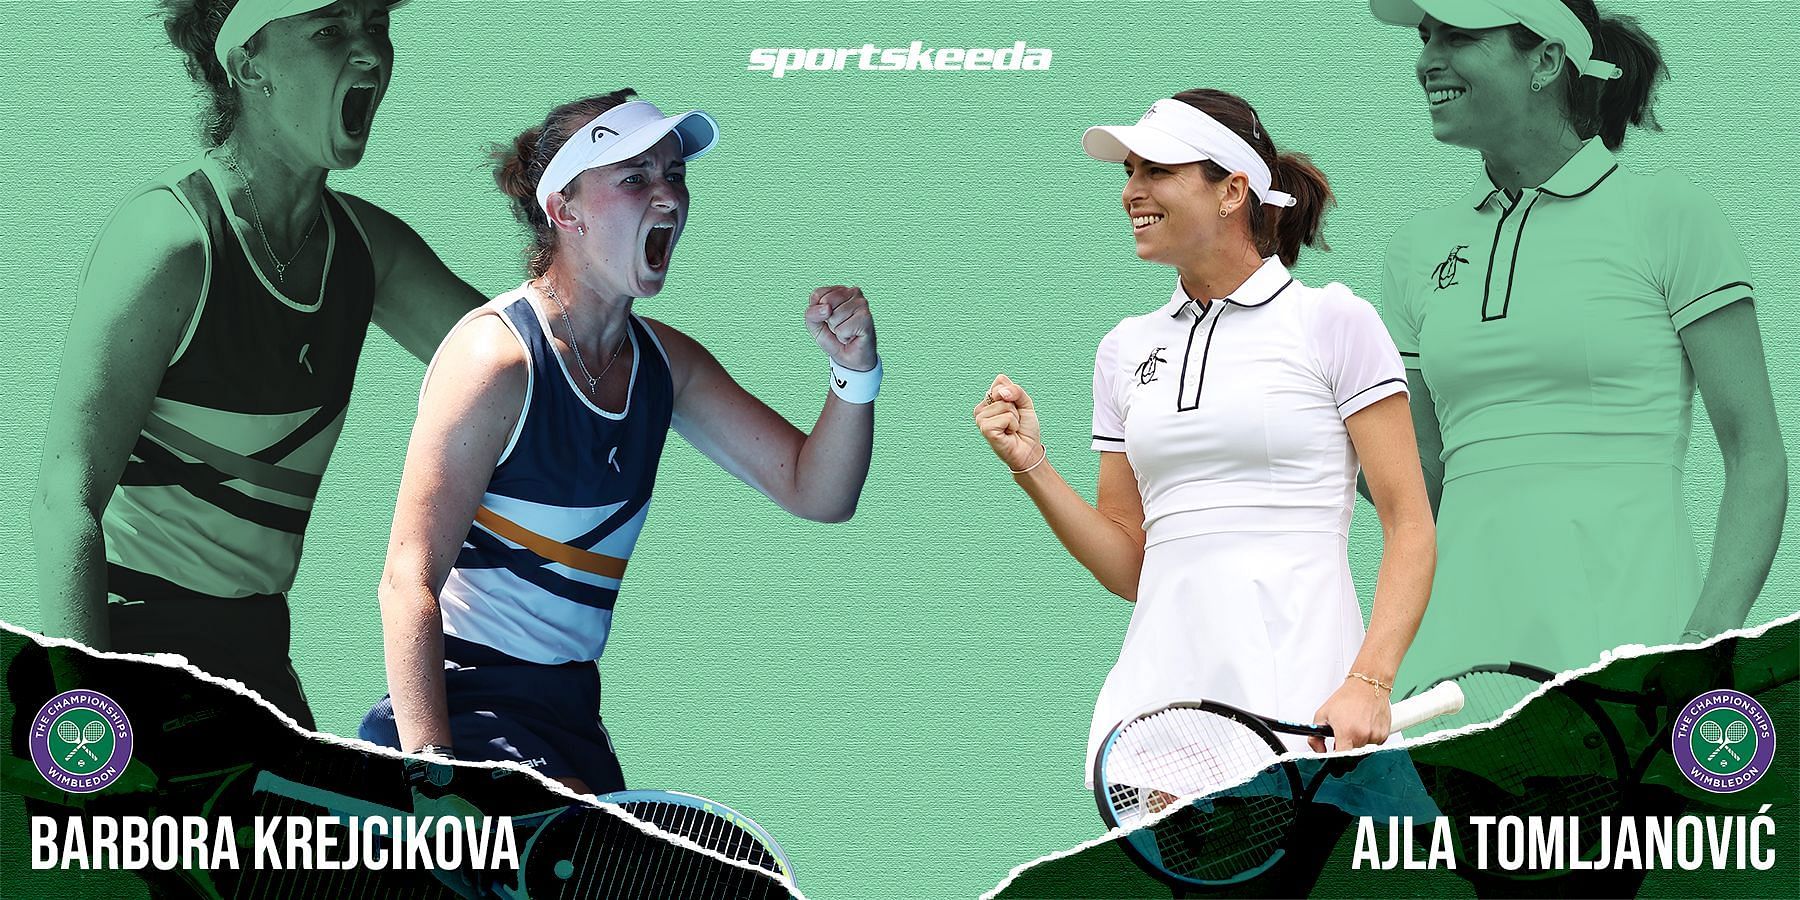 Krejcikova takes on Ajla Tomljanovic in the third round of the 2022 Wimbledon Championships